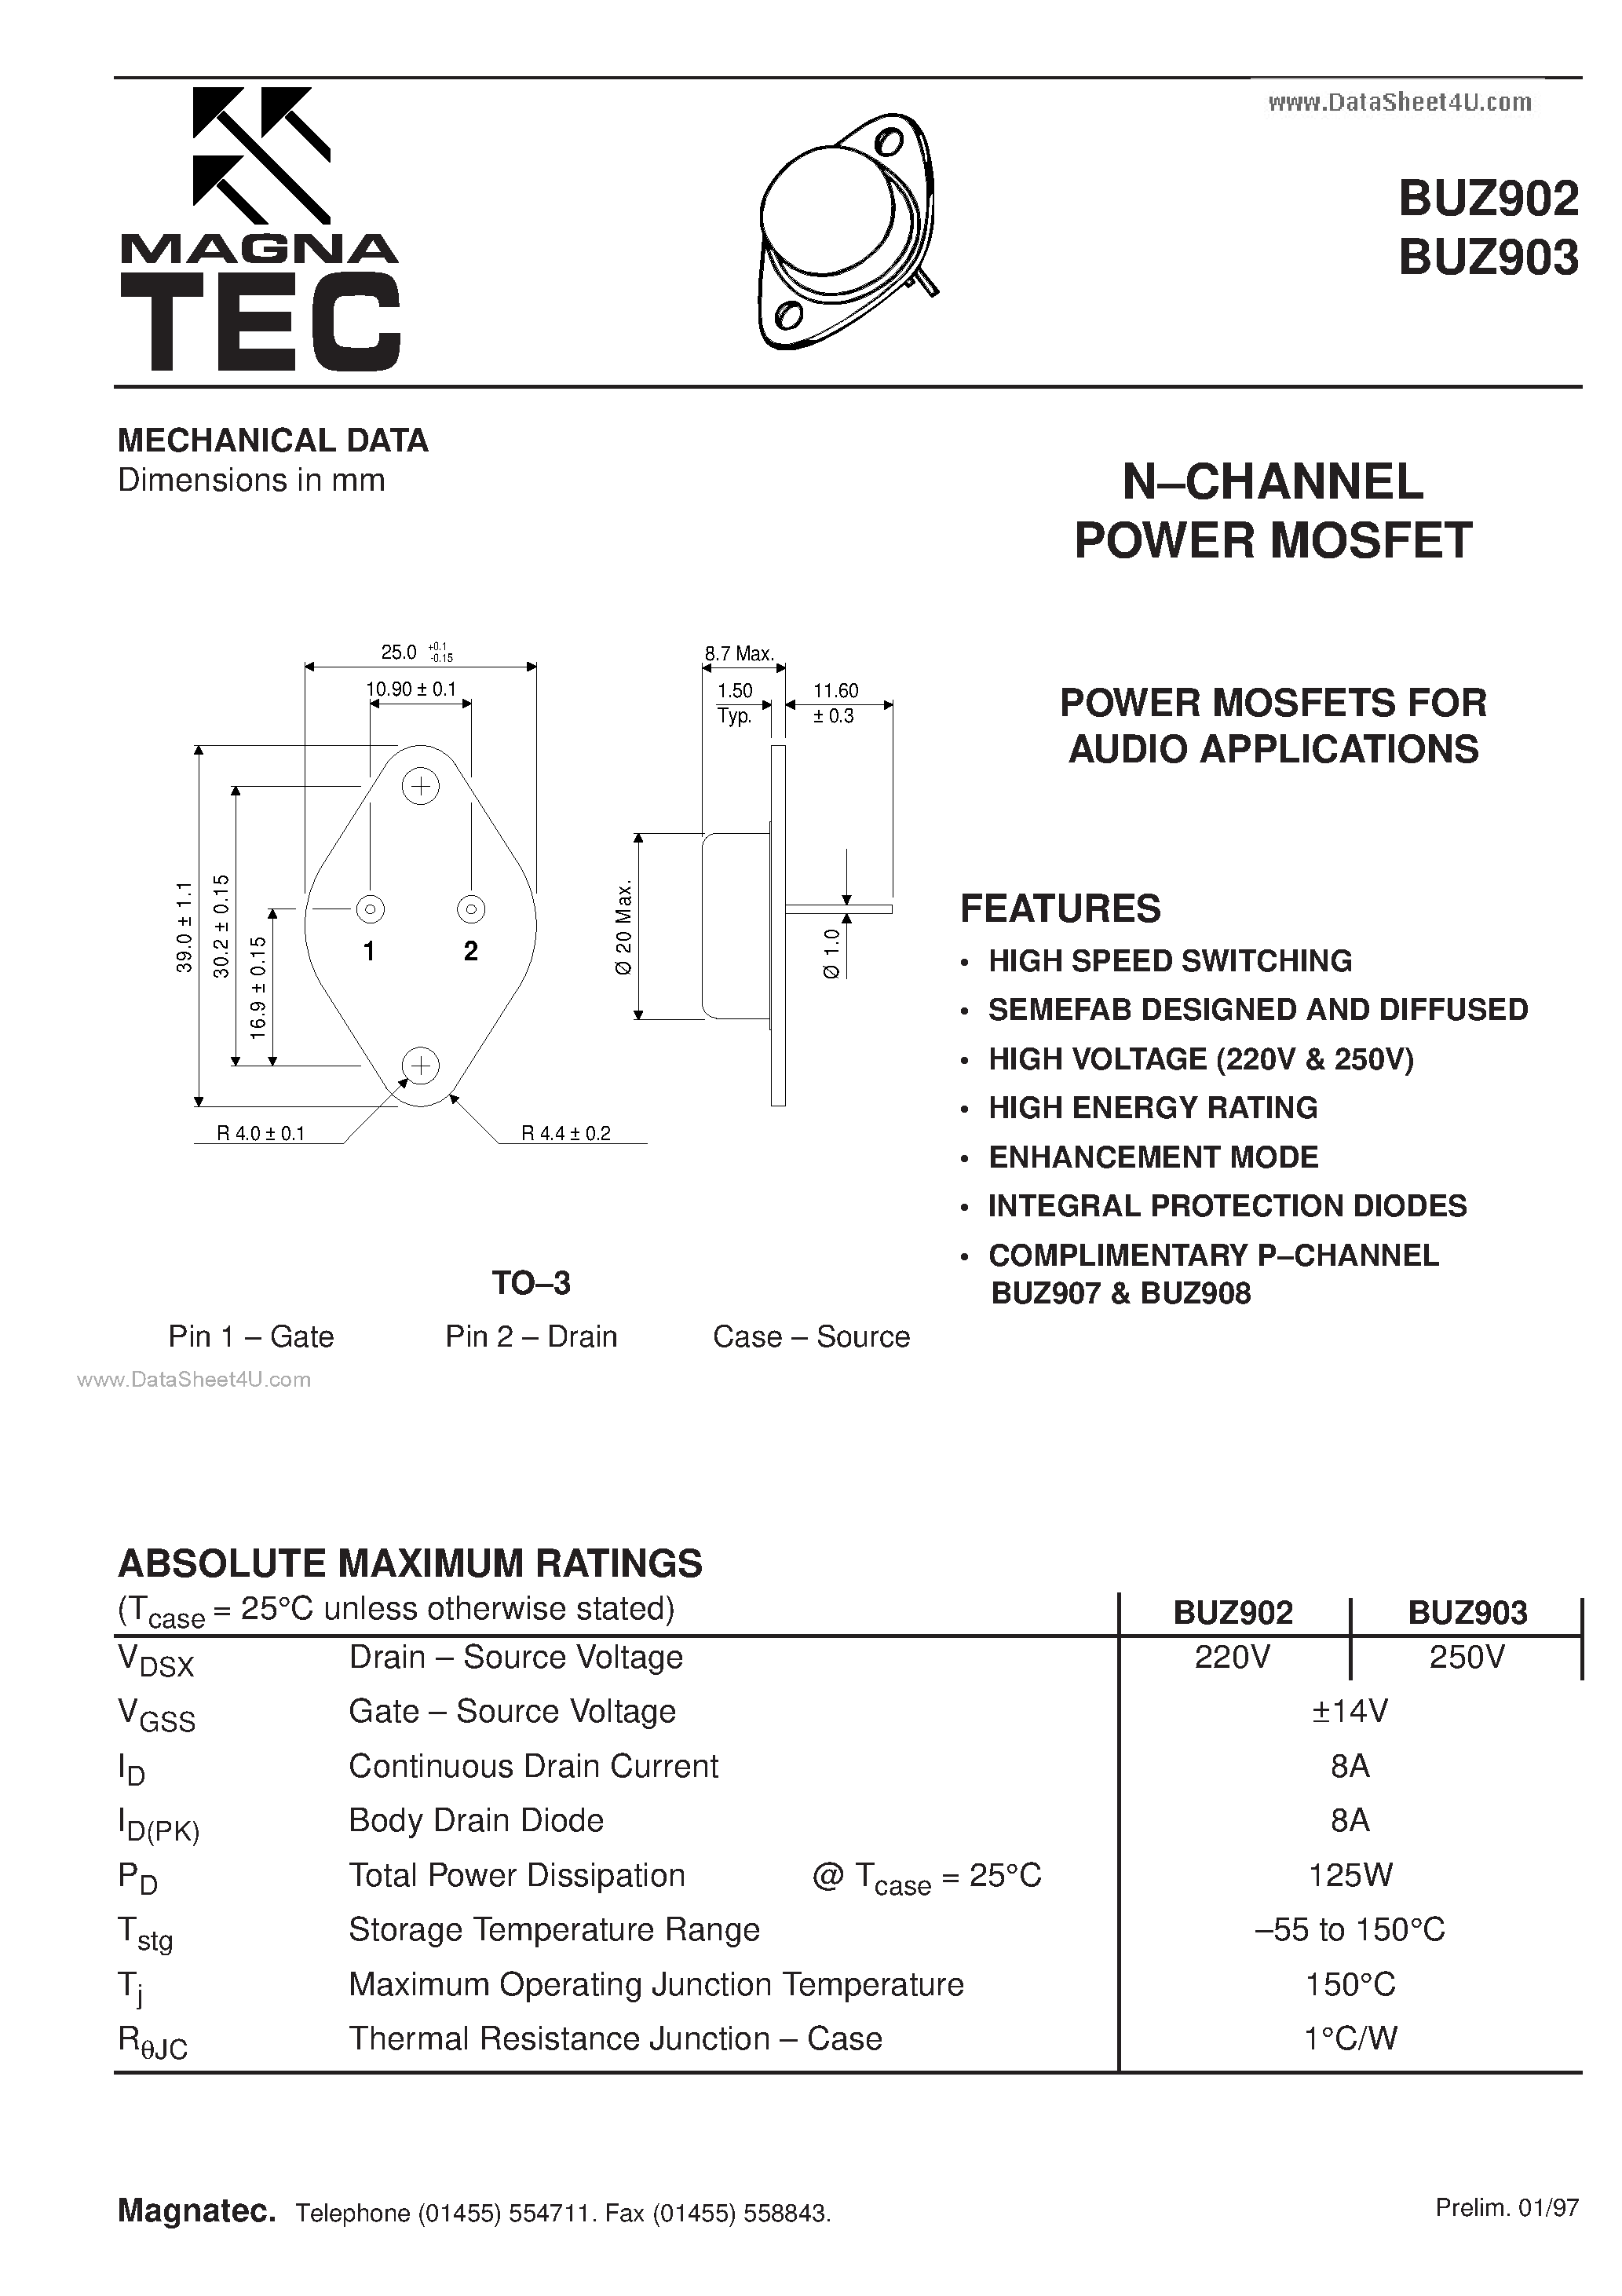 Datasheet BUZ902 - (BUZ902 / BUZ903) N CHANNEL POWER MOSFET page 1